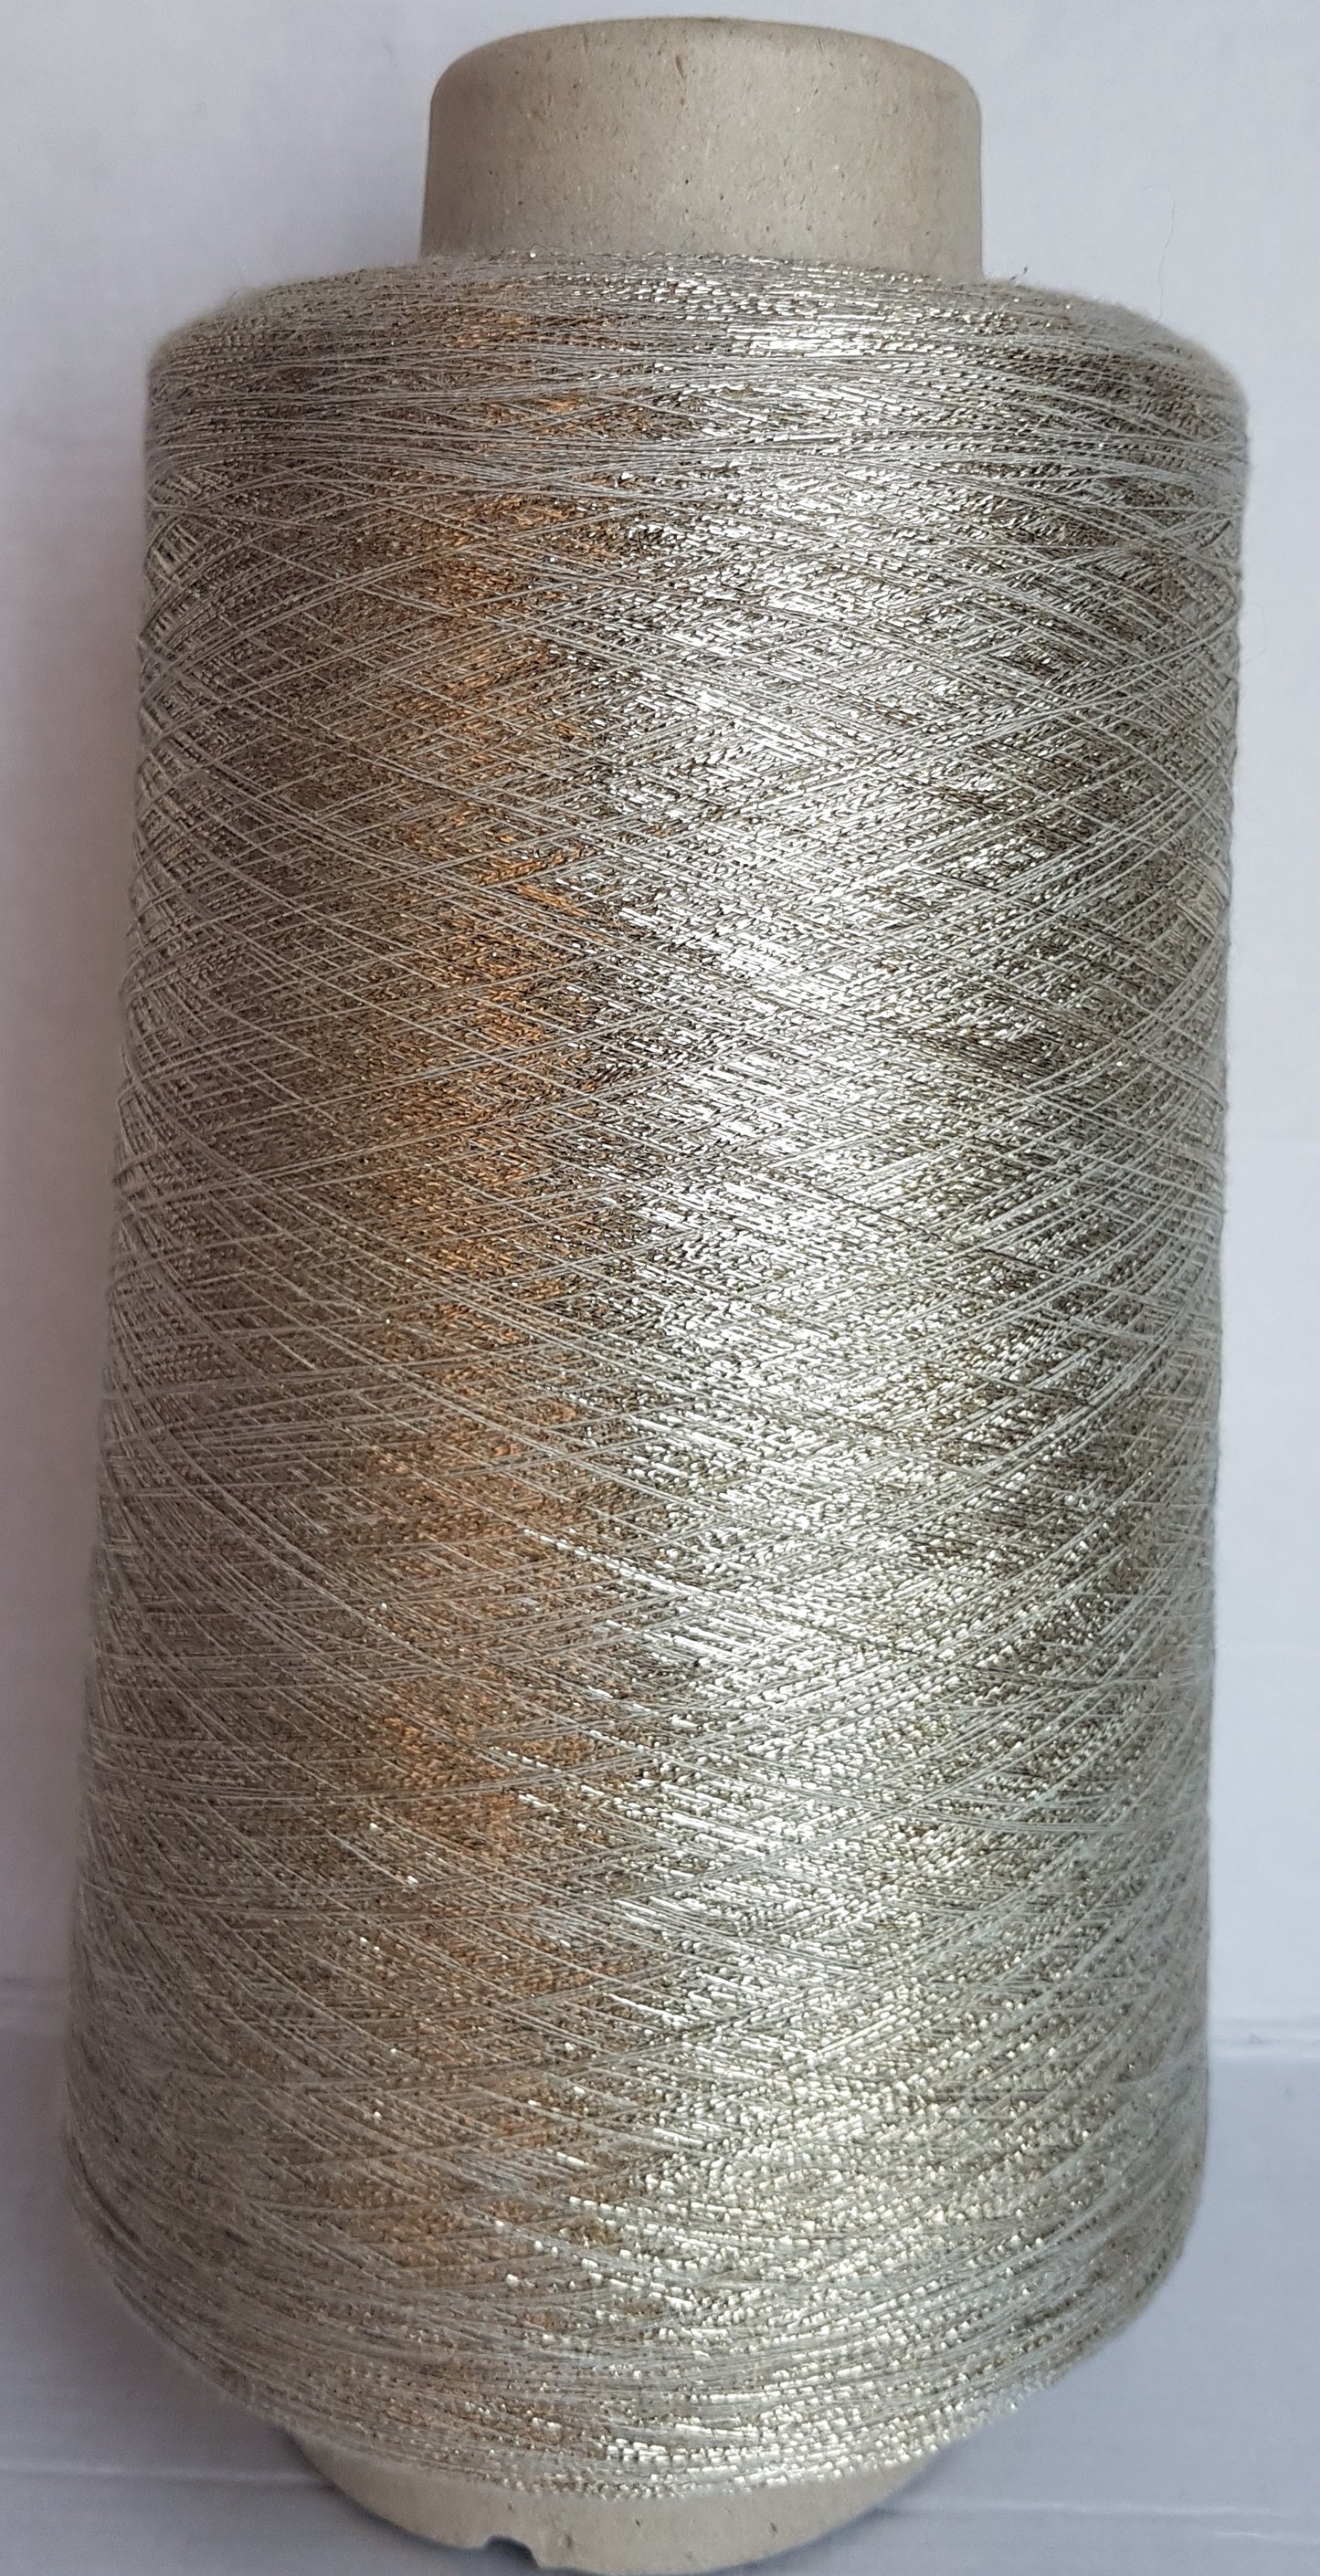 490g Lurex Italian yarn Italian gray color L55